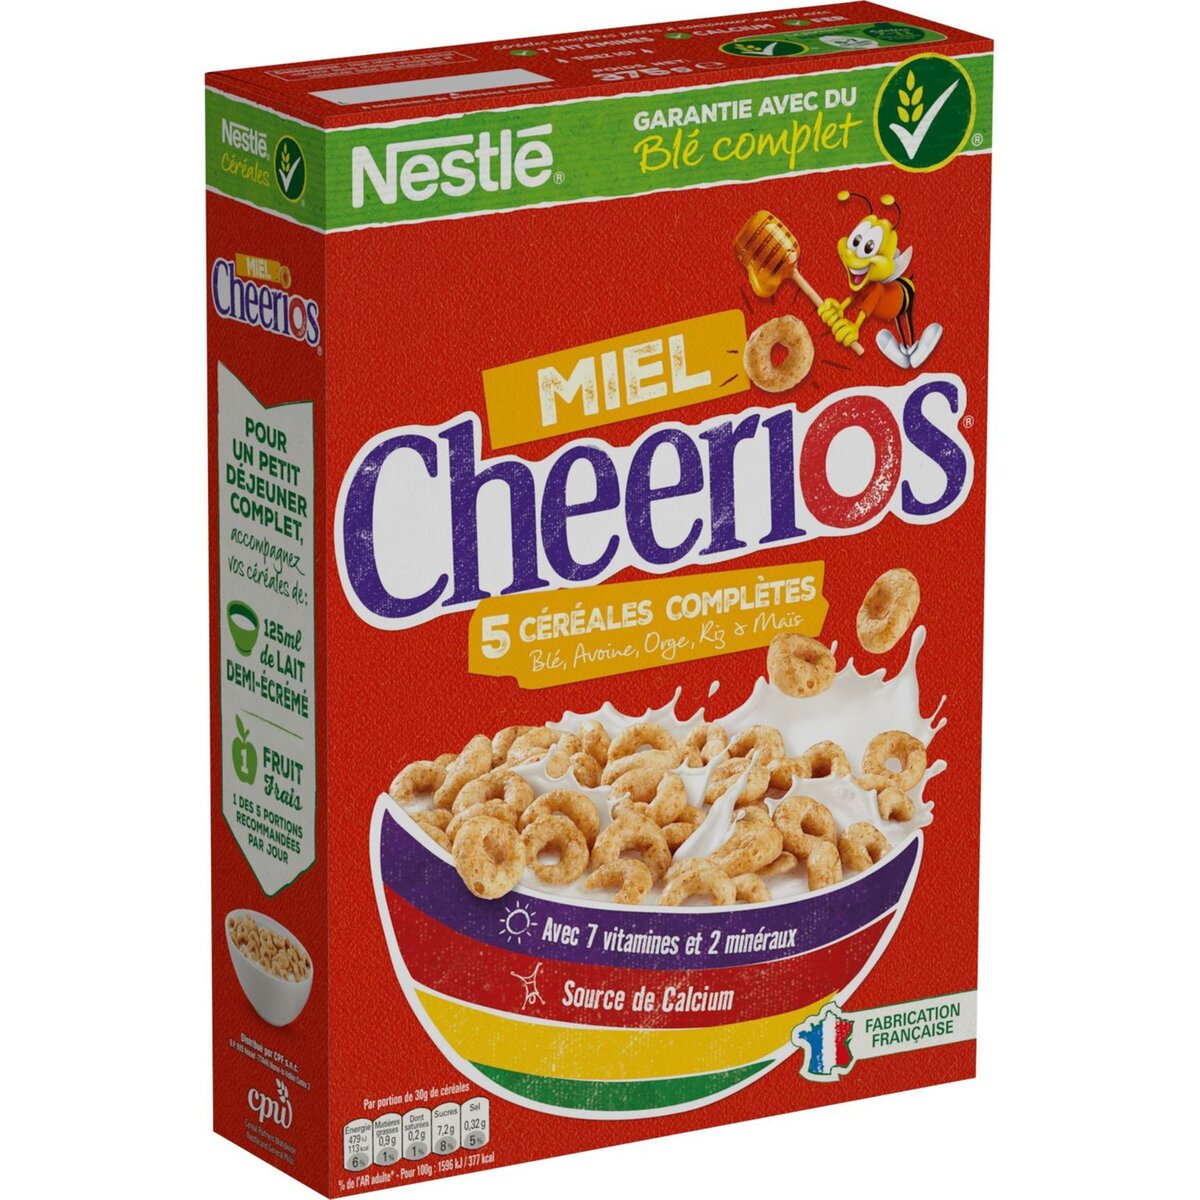 NESTLE Nestlé cheerios 375g